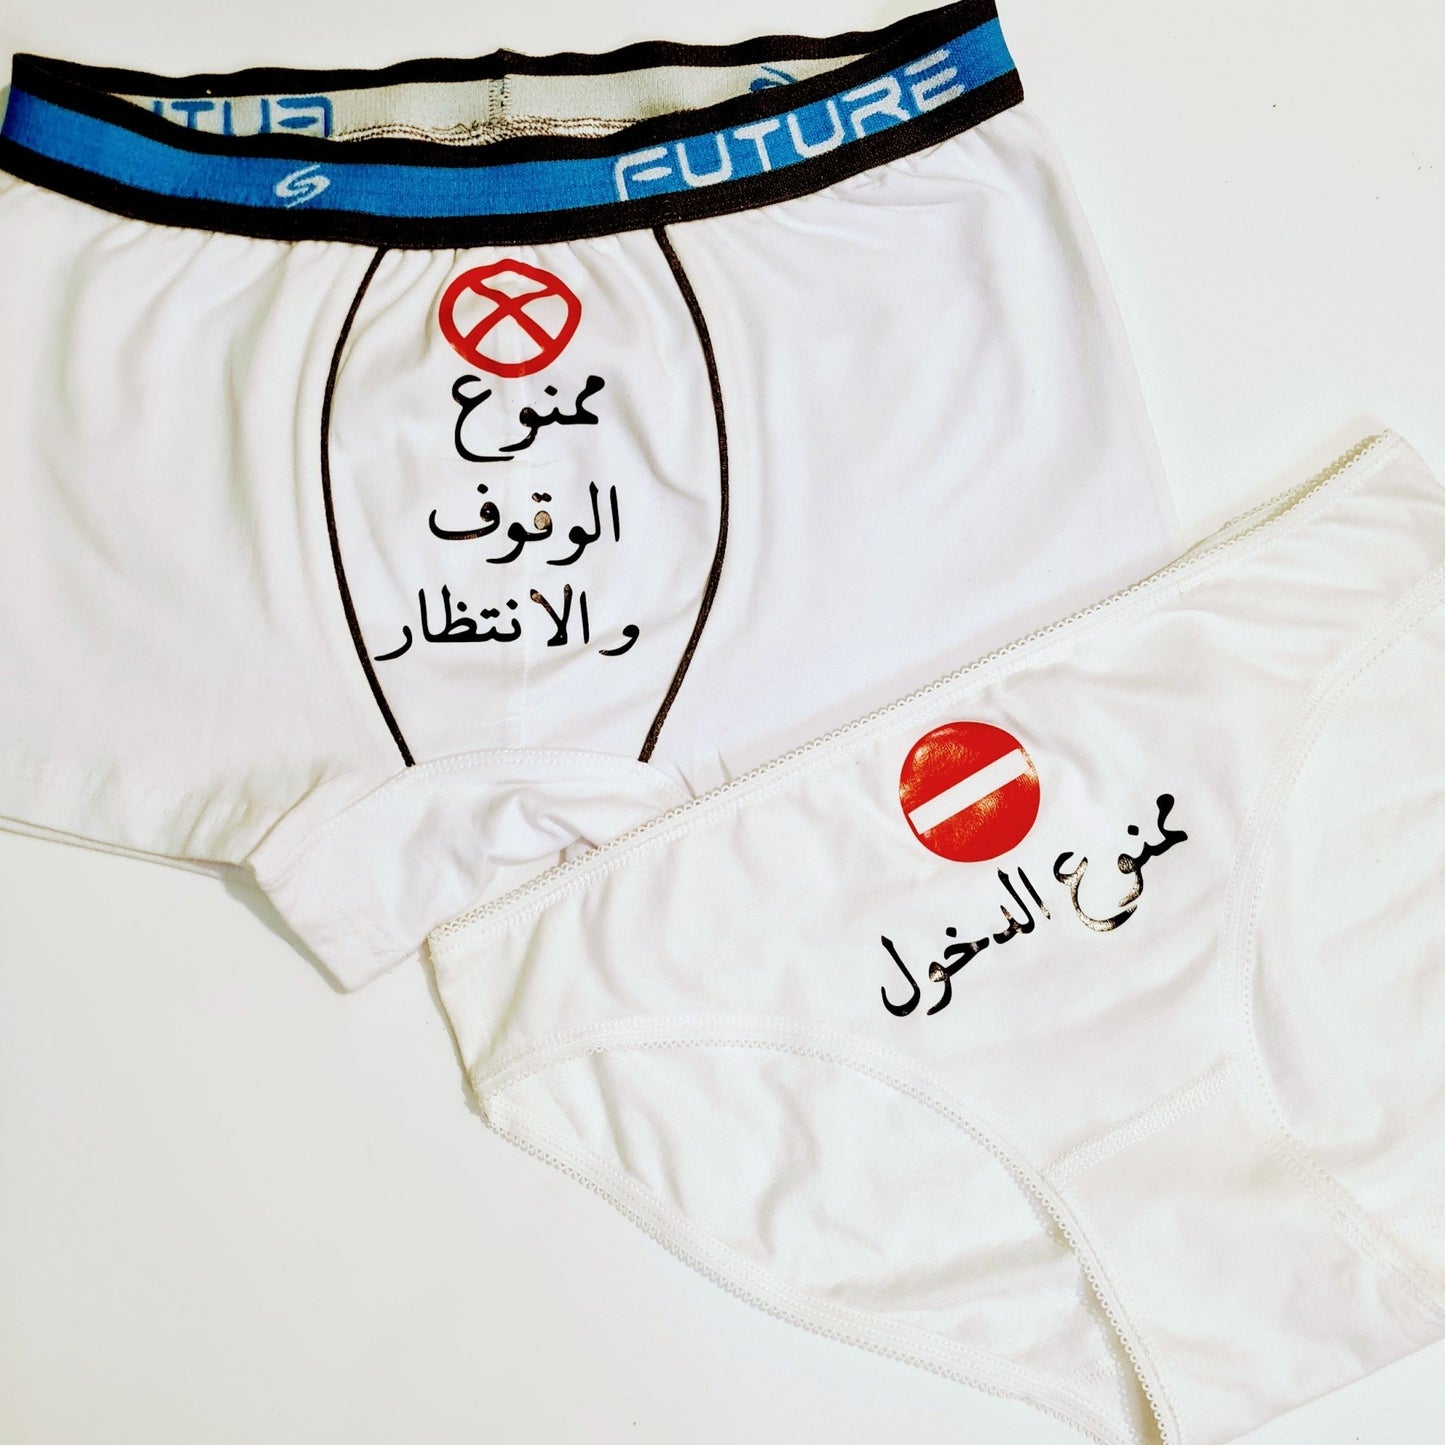 Couple underwear - Dkhool fel Mamnoo3 - Etba3lly